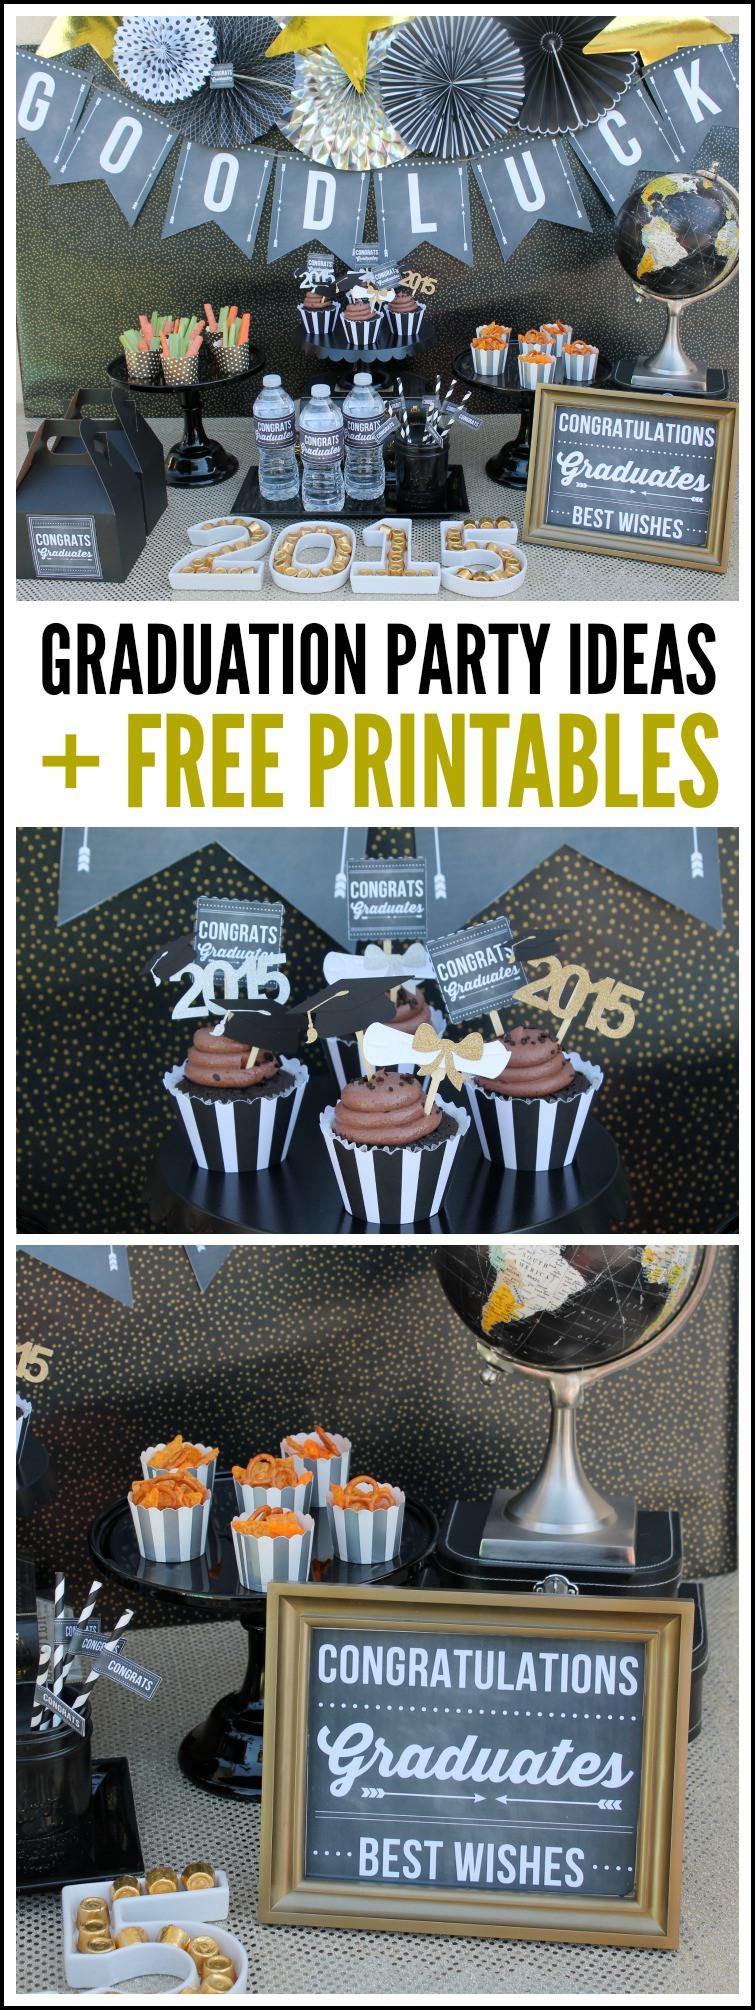 Graduation Party Photo Ideas
 Graduation Party Ideas Free Printables